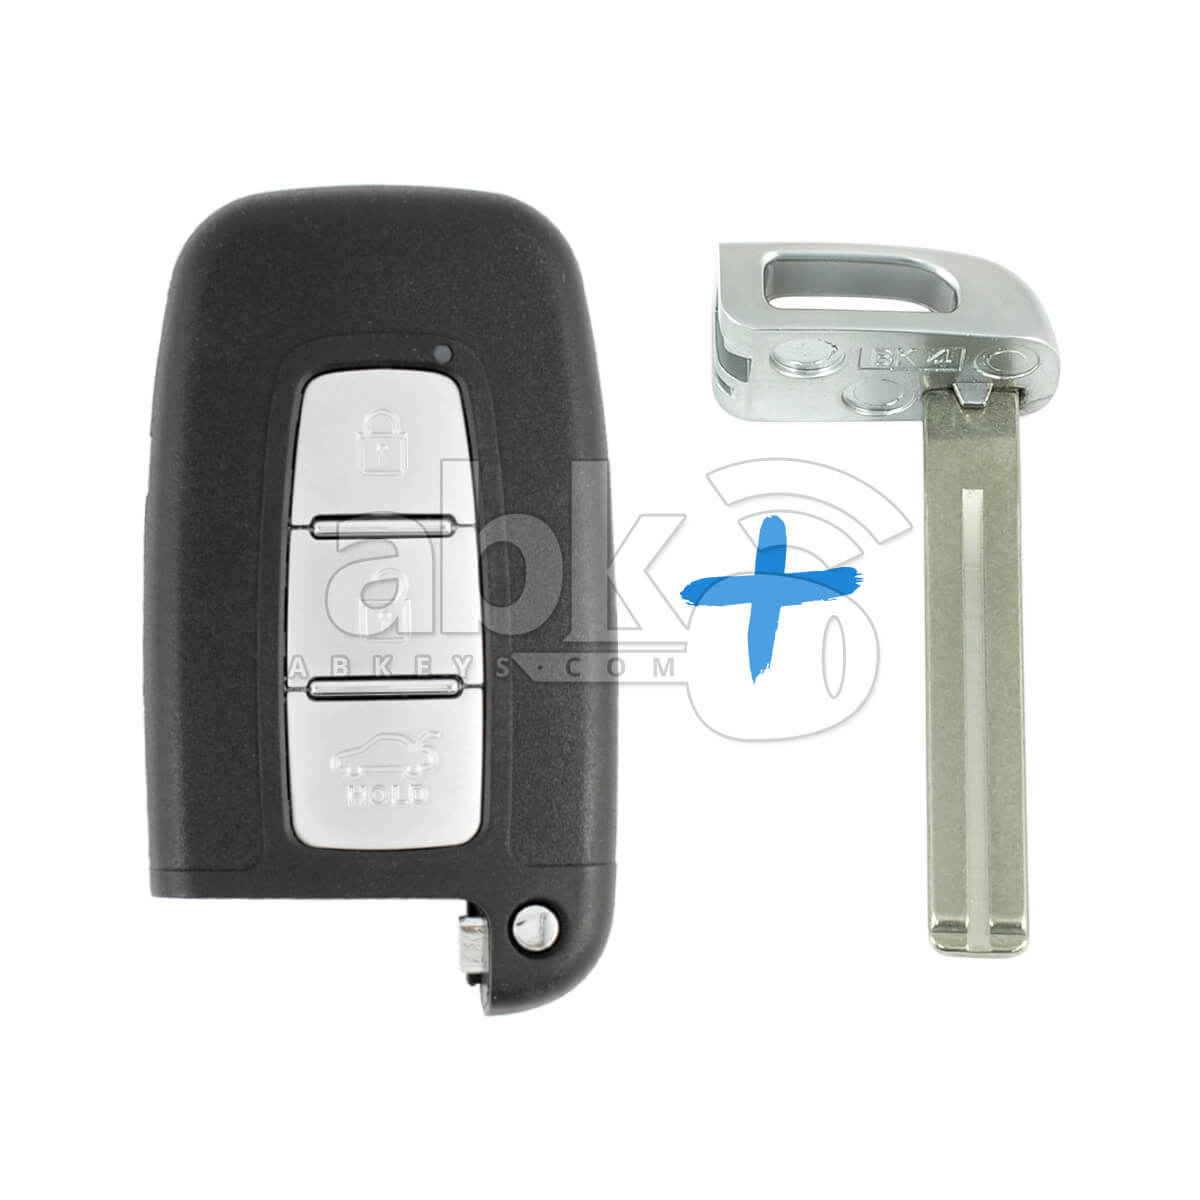 HYUNDAI ix35 Replacement Key Melbourne - Hyundai ix35 Smart Key